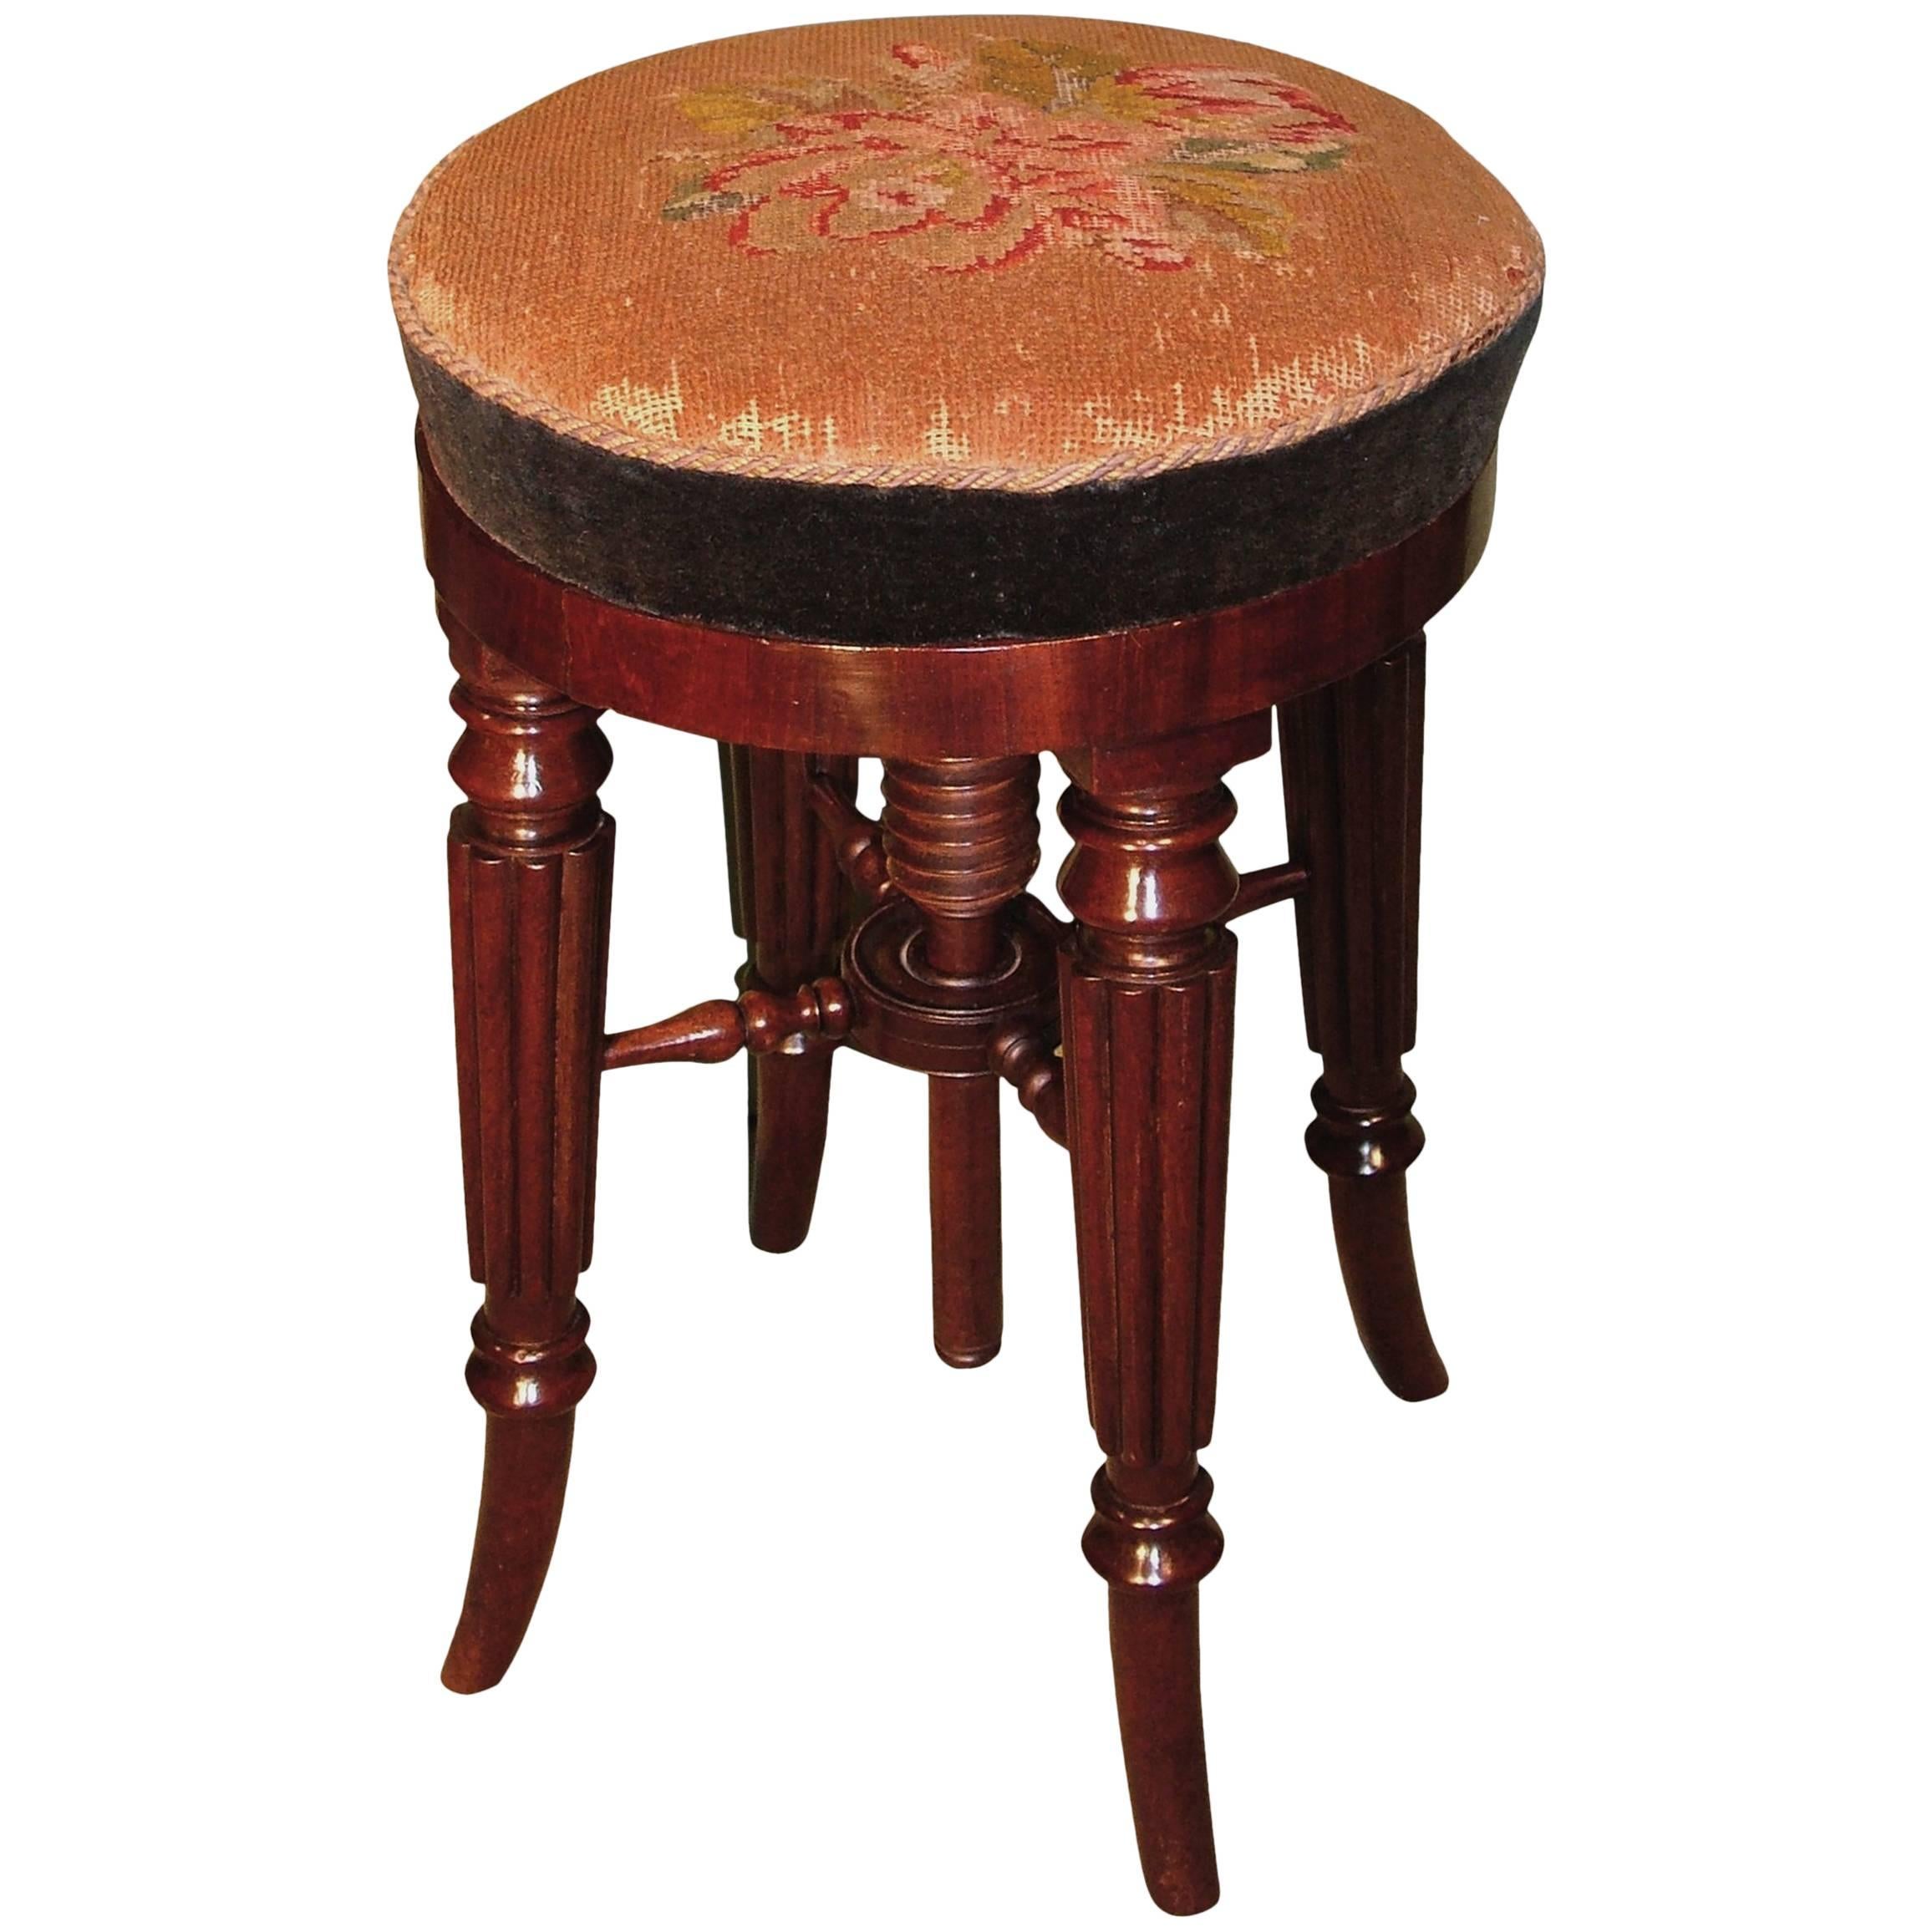 Regency period mahogany adjustable music stool